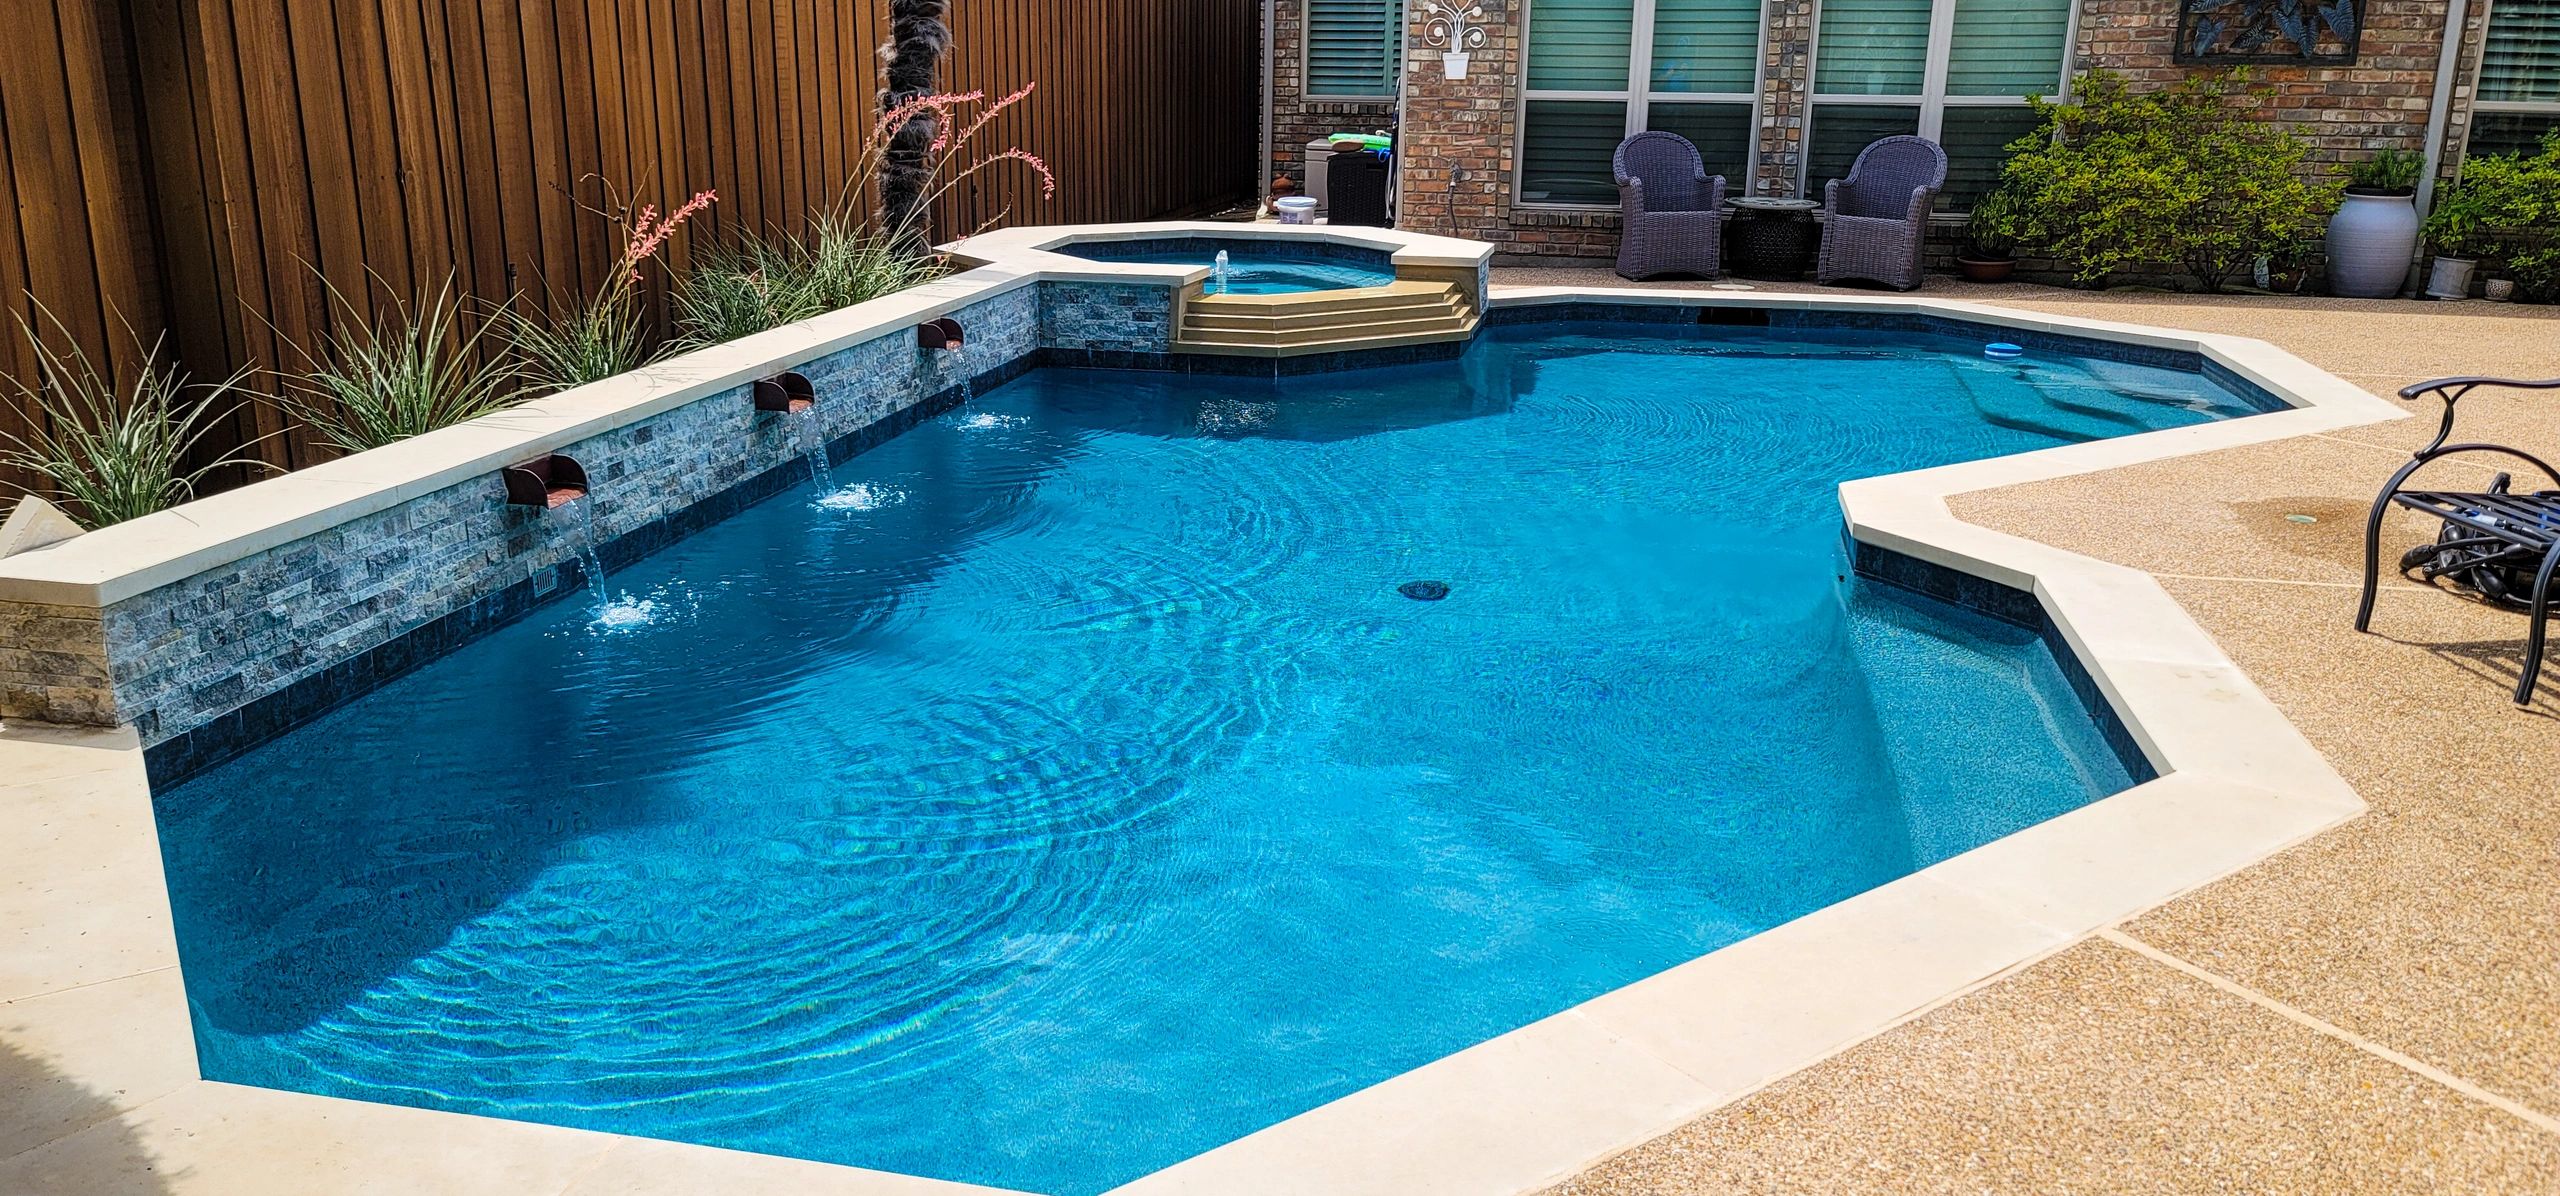 dallas richardson pool remodel 9 Fort Worth Pool Remodeling